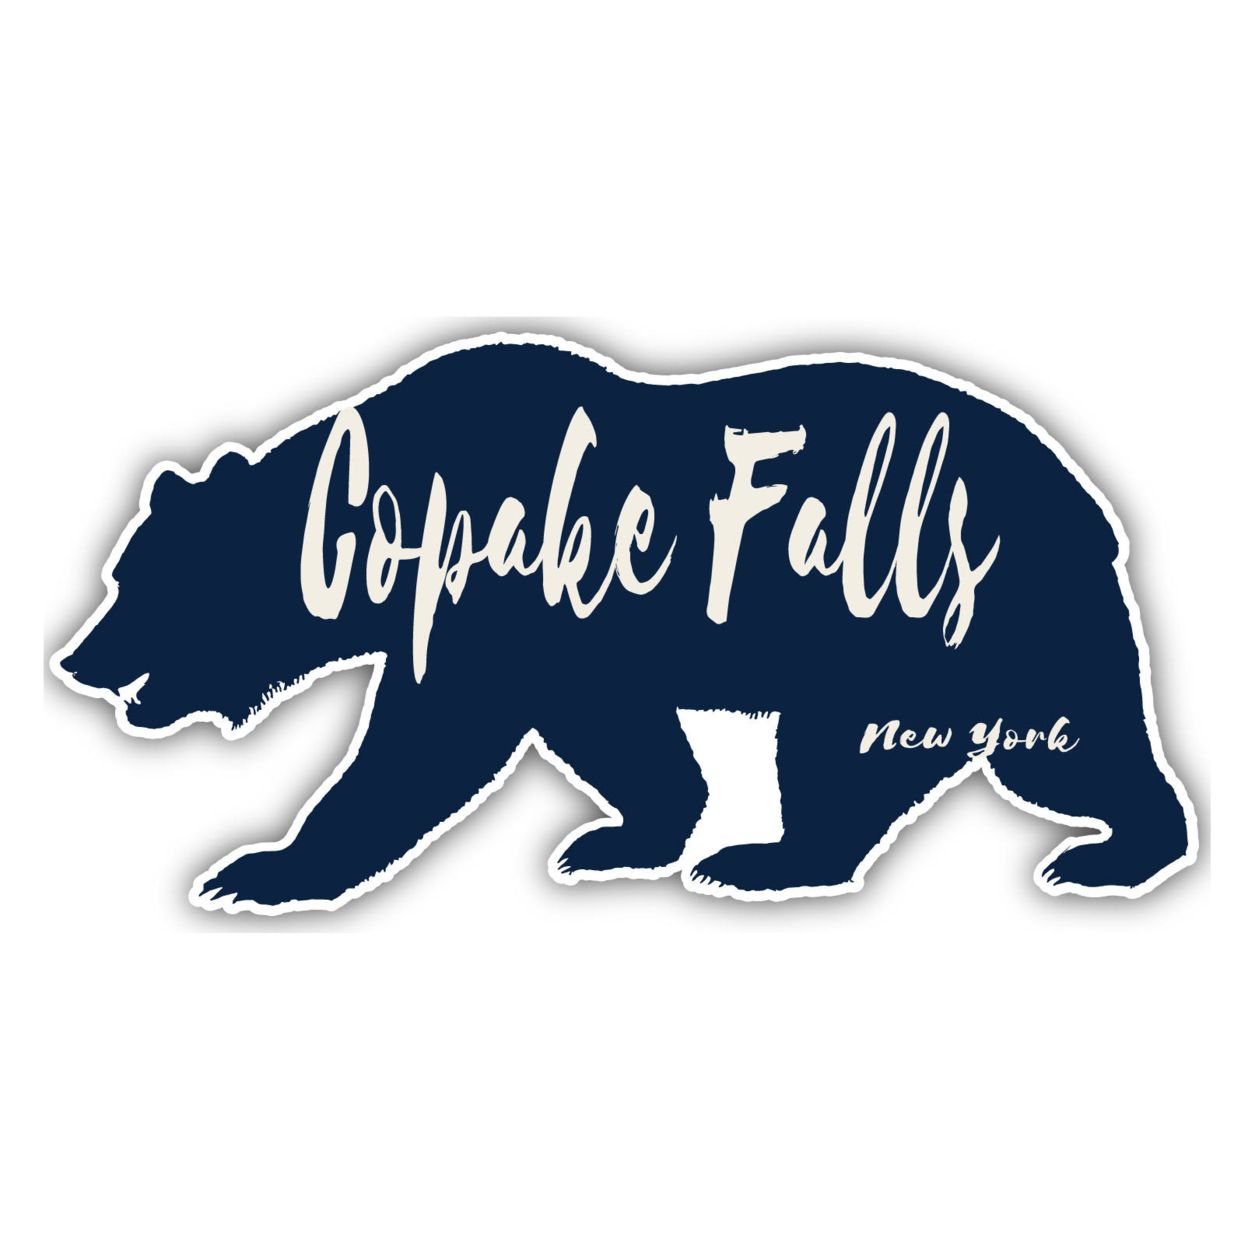 Copake Falls New York Souvenir Decorative Stickers (Choose Theme And Size) - Single Unit, 8-Inch, Bear